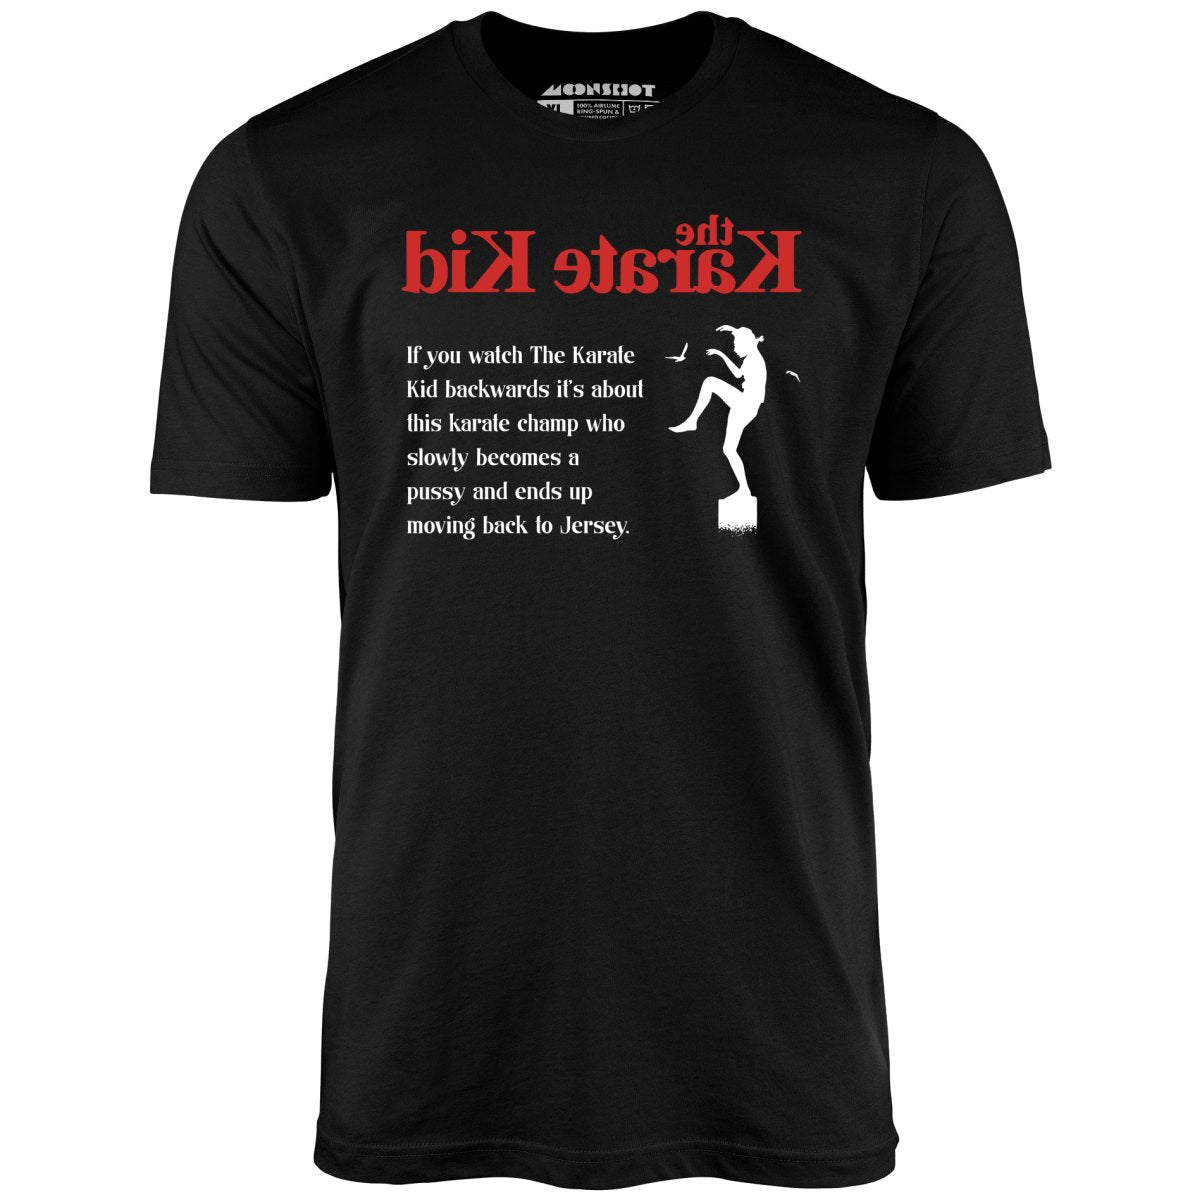 The Karate Kid Backwards Meme - Unisex T-Shirt